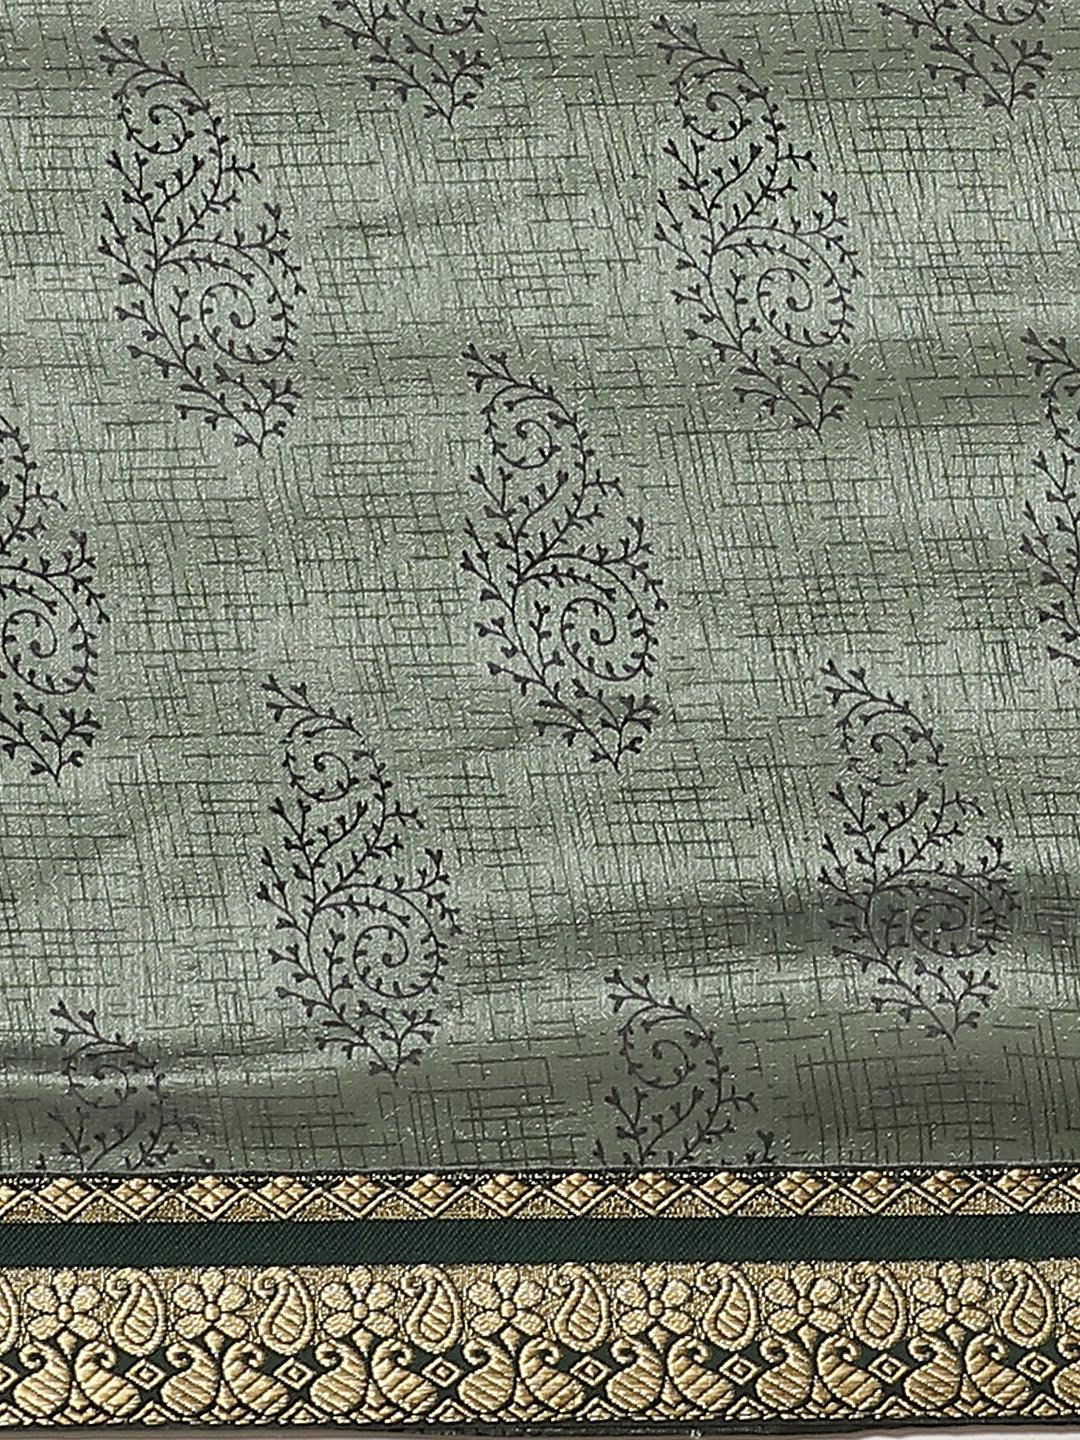 Green Printed Silk Blend Saree - Libas